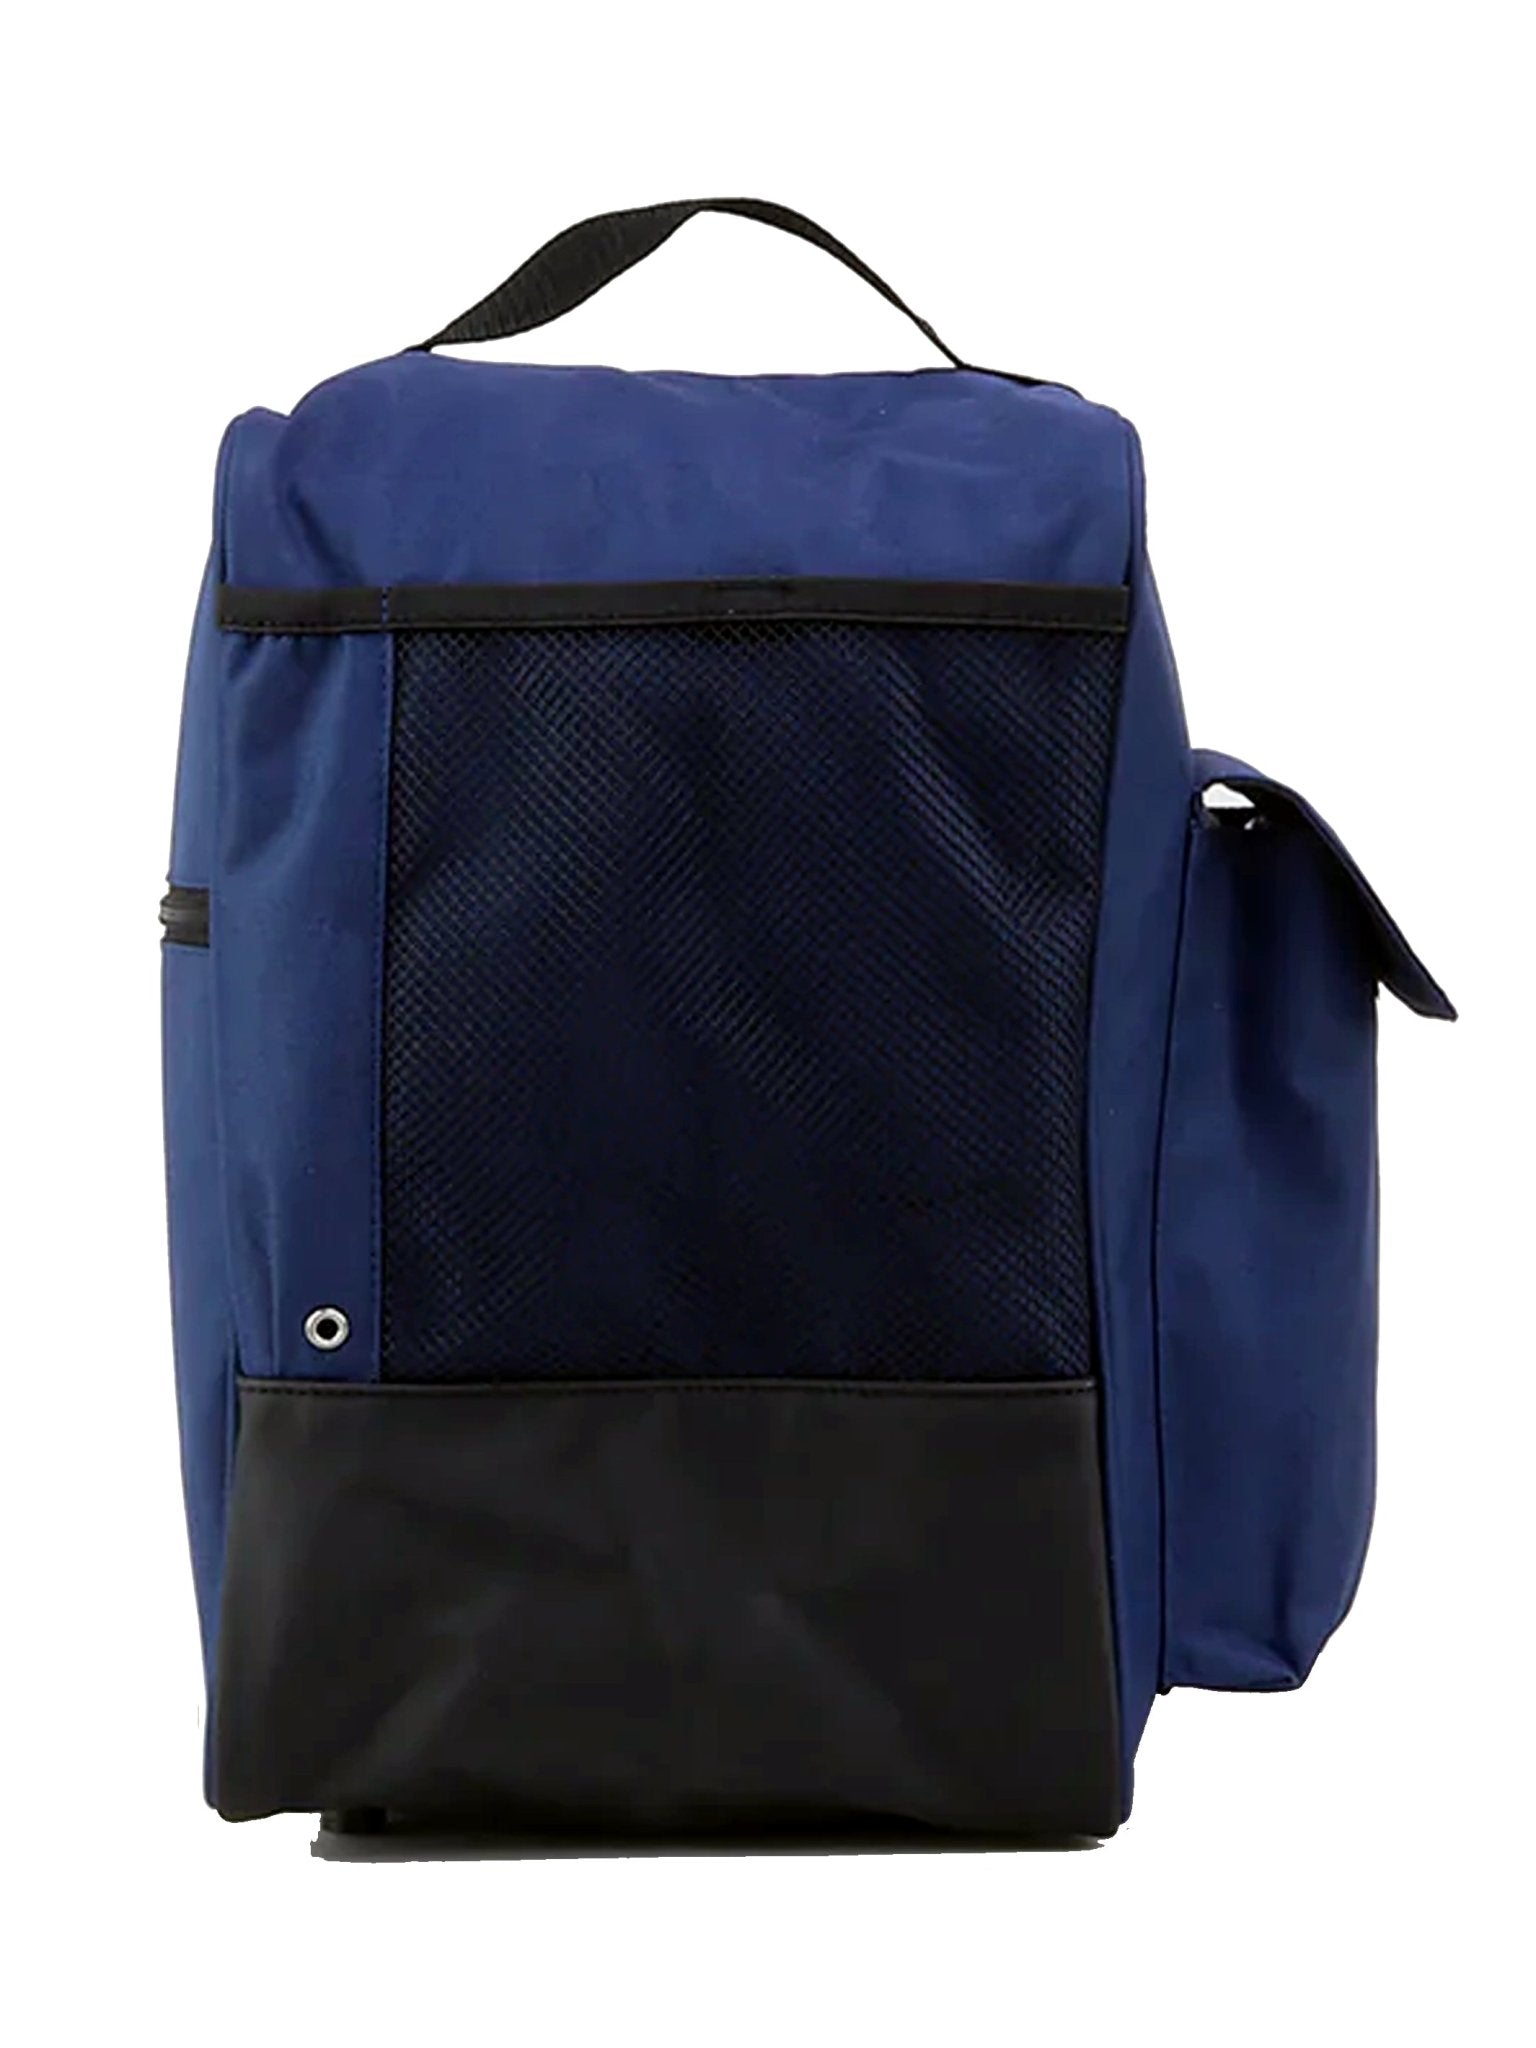 4elementsclothingThe British Bag CompanySophos - Walking Boot Bag and shoe bag. Nylon boot bag for walking boots storage / car tidyBag795050